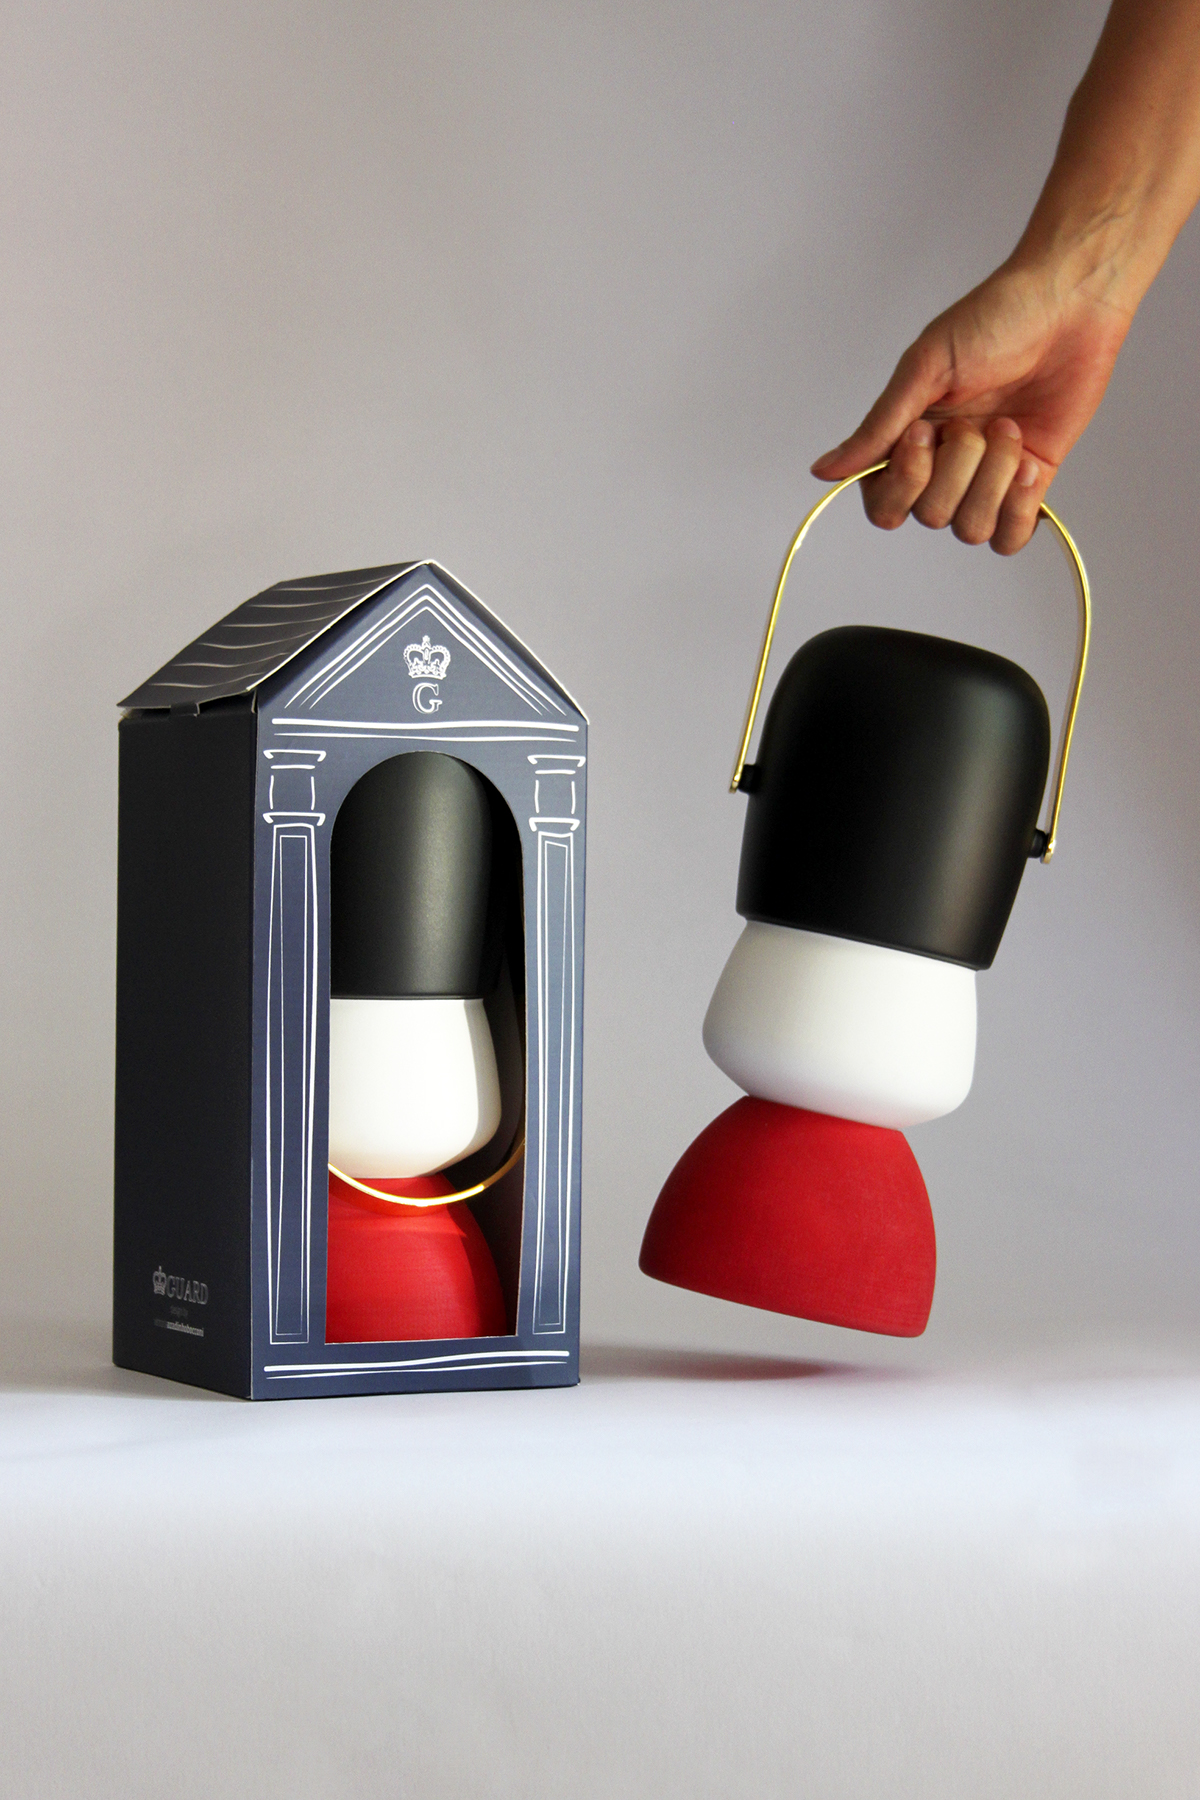 guard queen's guard queen Buckingham Palace London Lamp table lamp lantern souvenir Lighting Design 